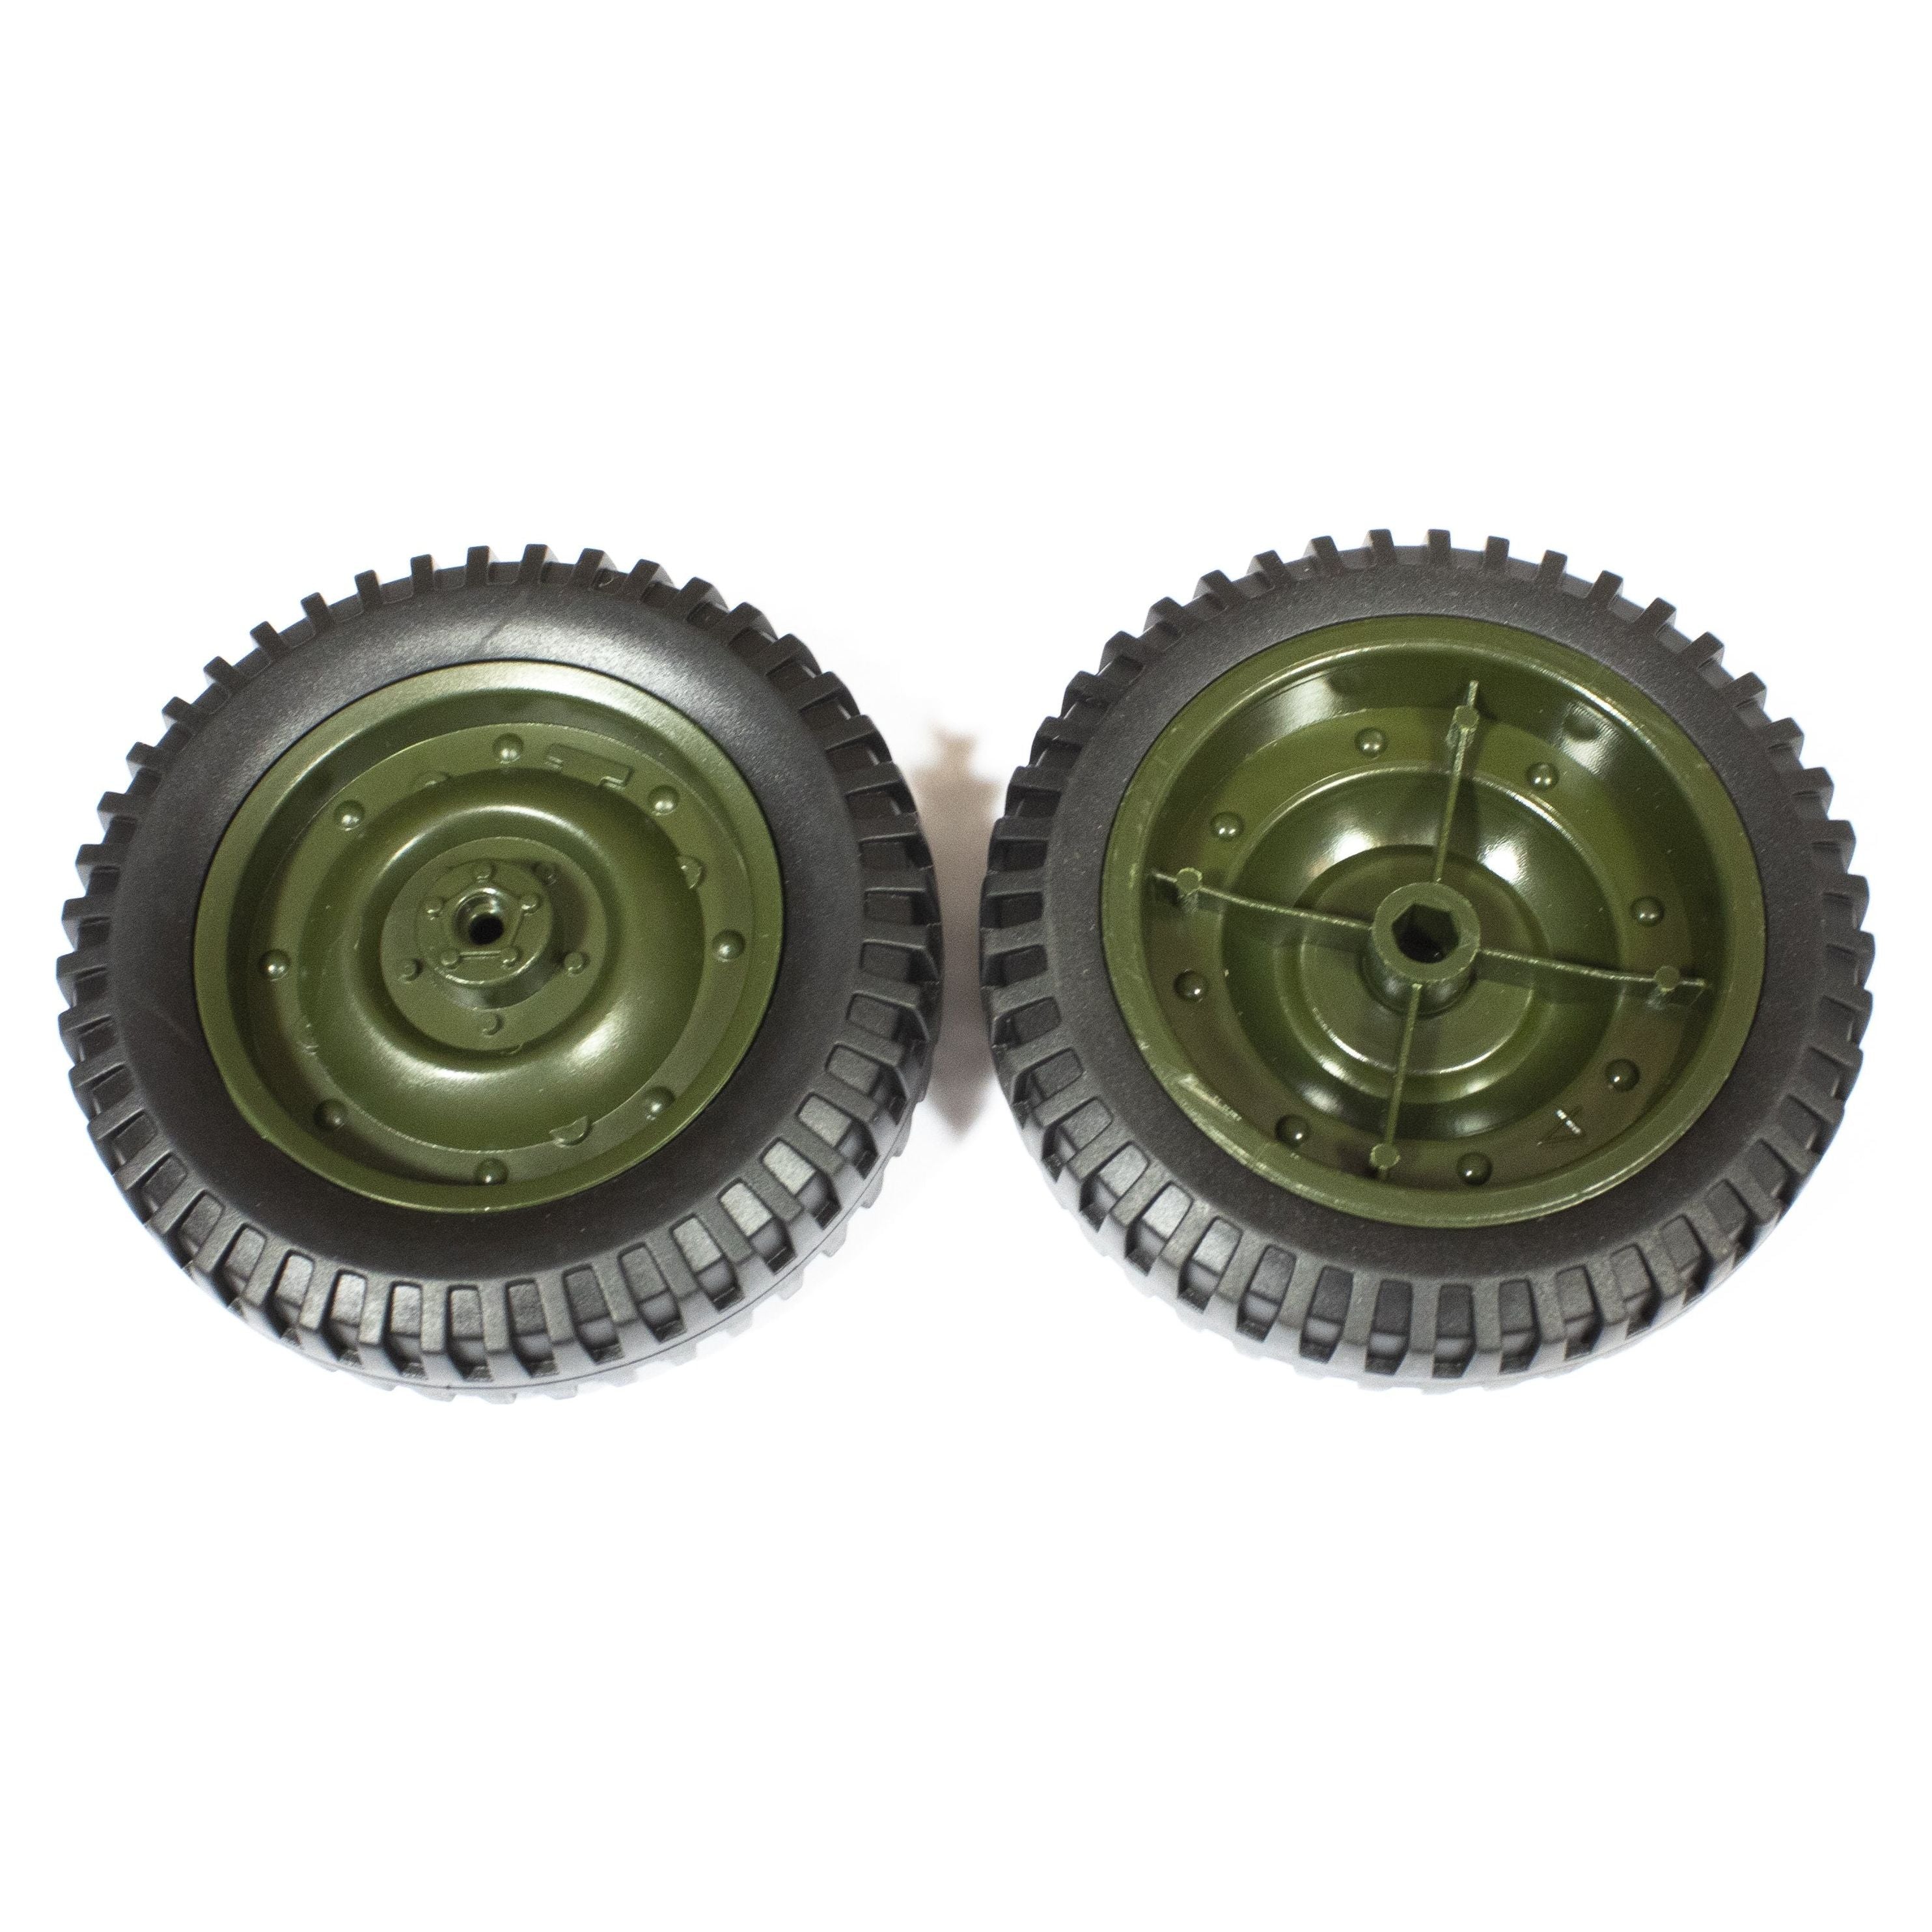 Willys Tires (1 Pair) (Green/Tan)